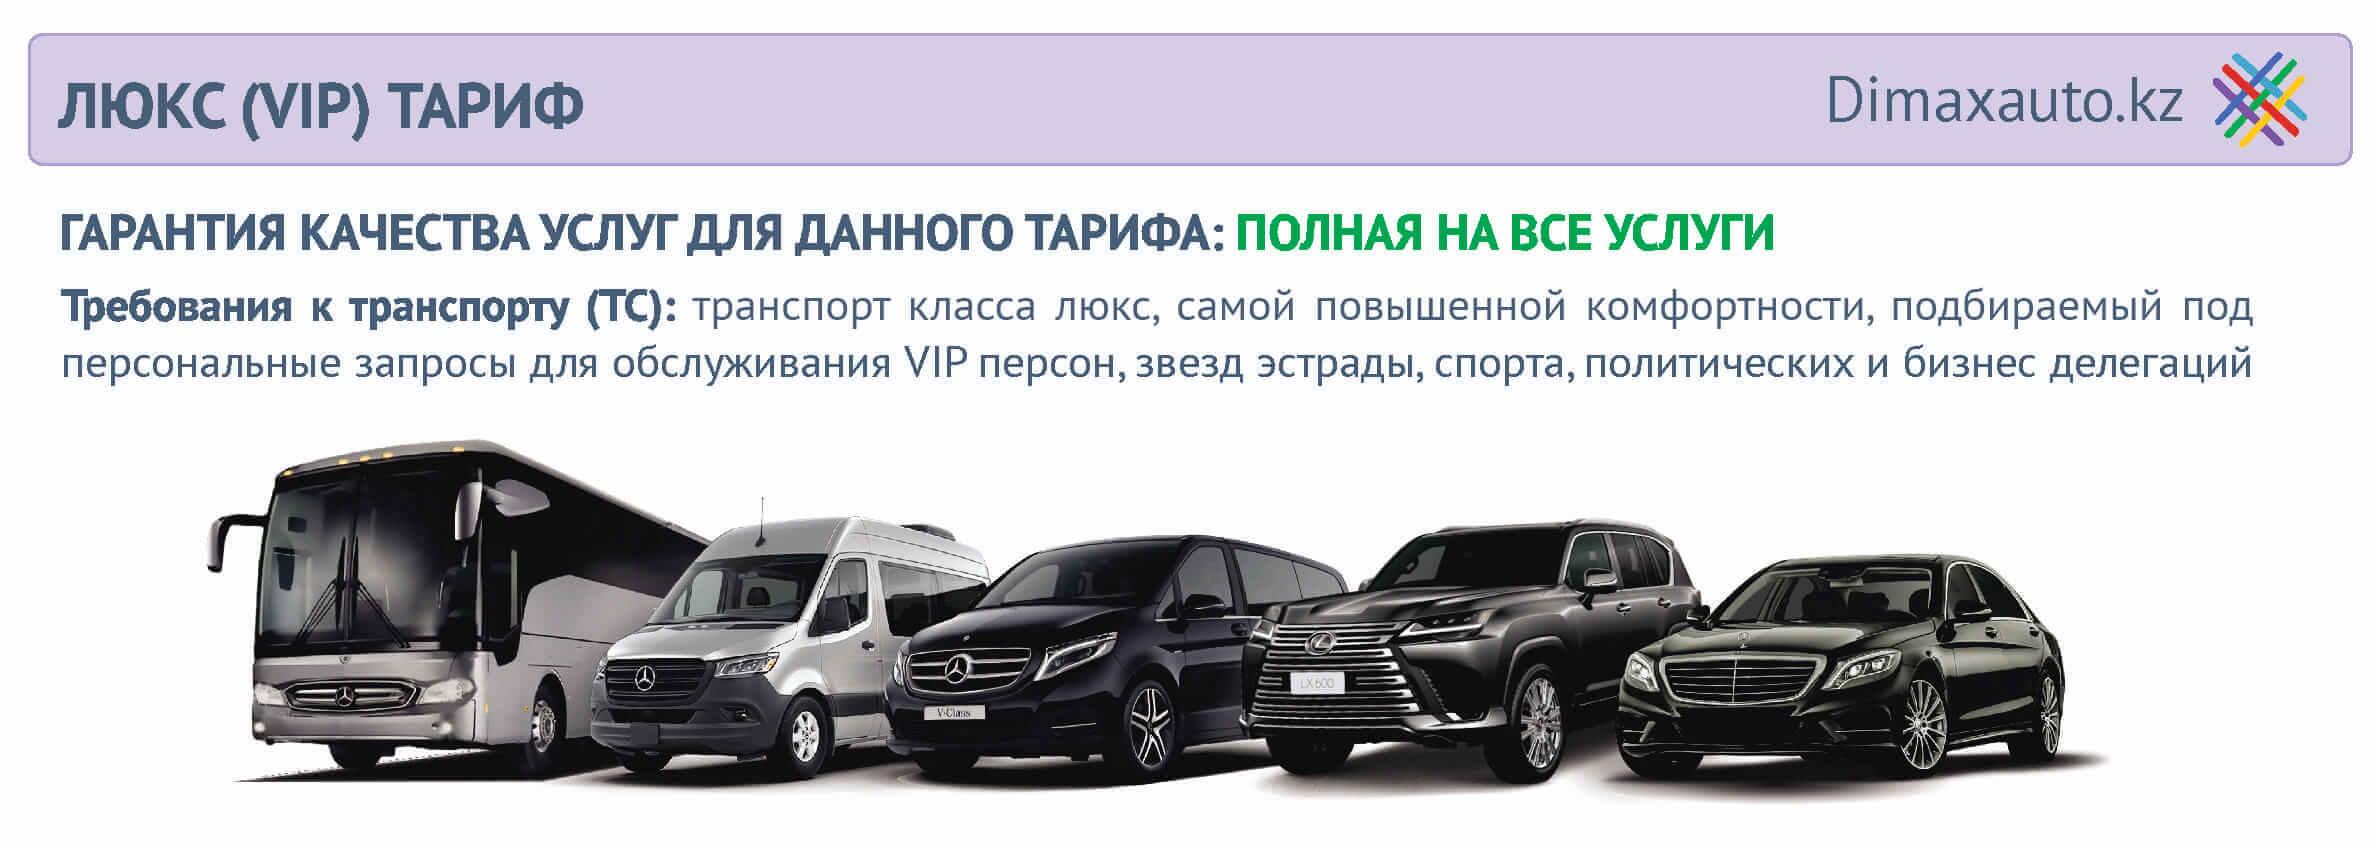 ВИП (VIP) тариф для аренды транспорта в Казахстане